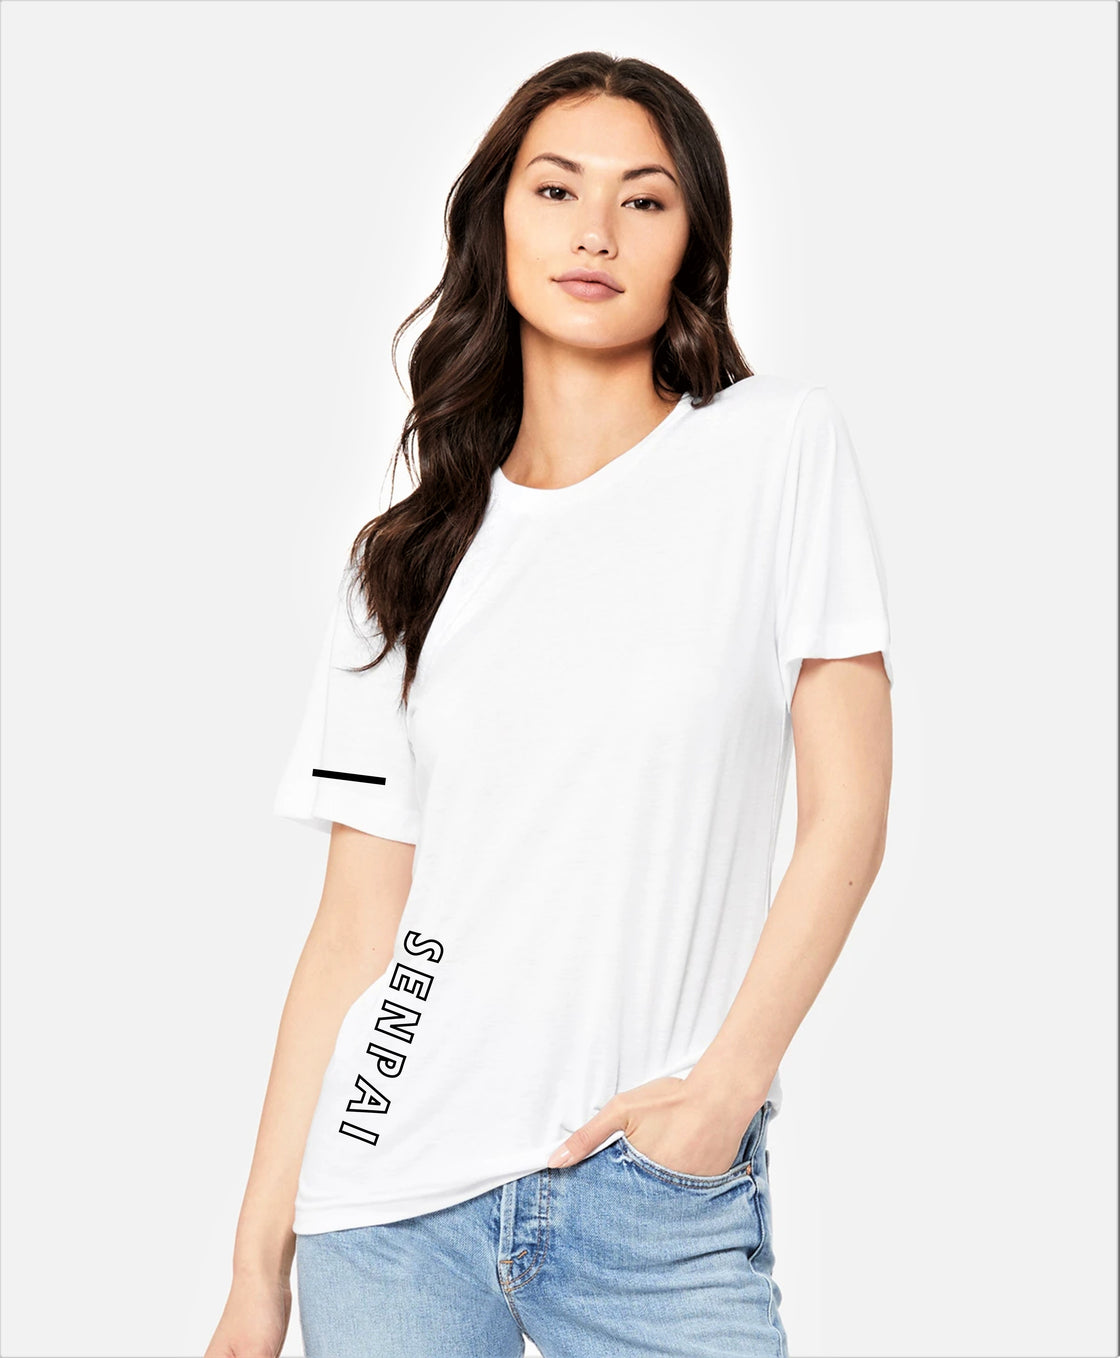 Women's White Polyester Round Neck T-Shirt